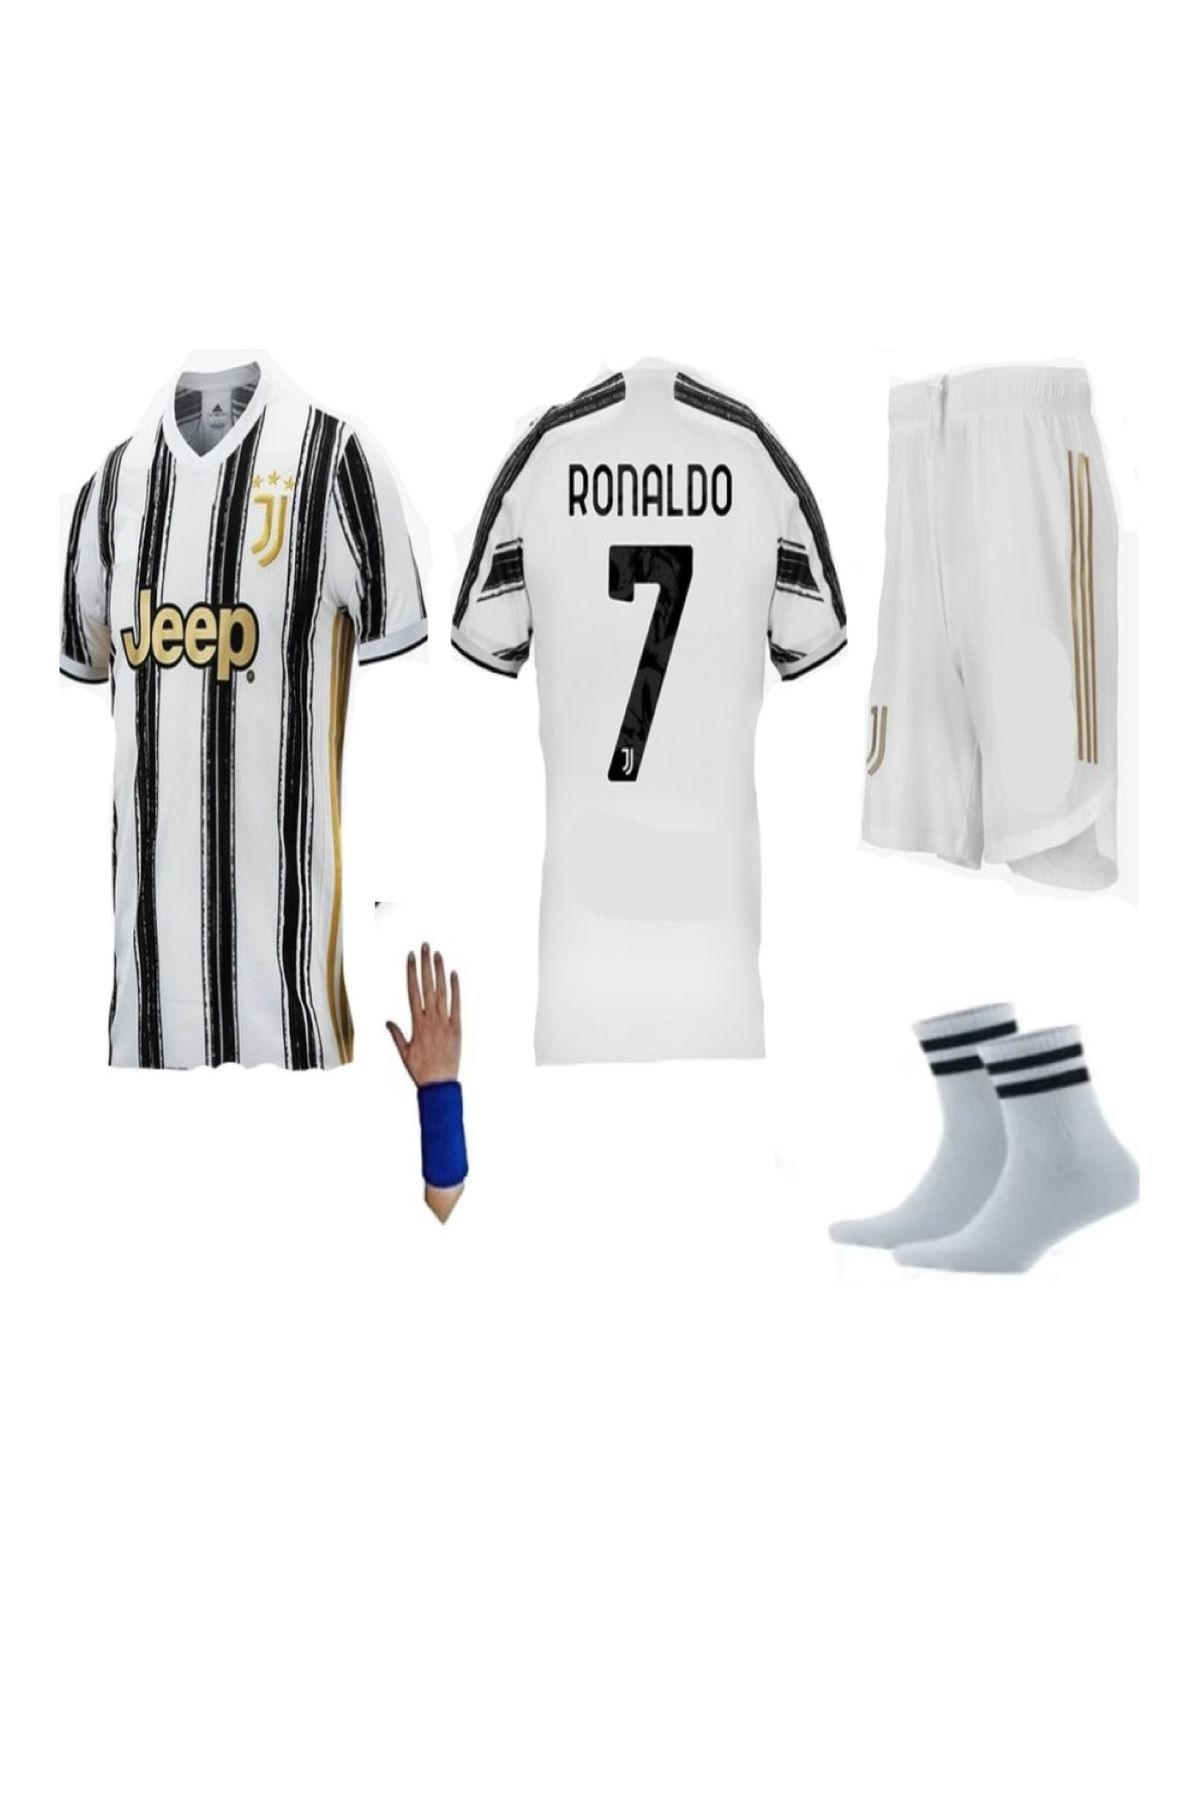 yenteks Ronaldo Retro Juventus Beyaz Iç Saha Çocuk Futbol Forması 4'lü Set 21/22 Sezon 8988